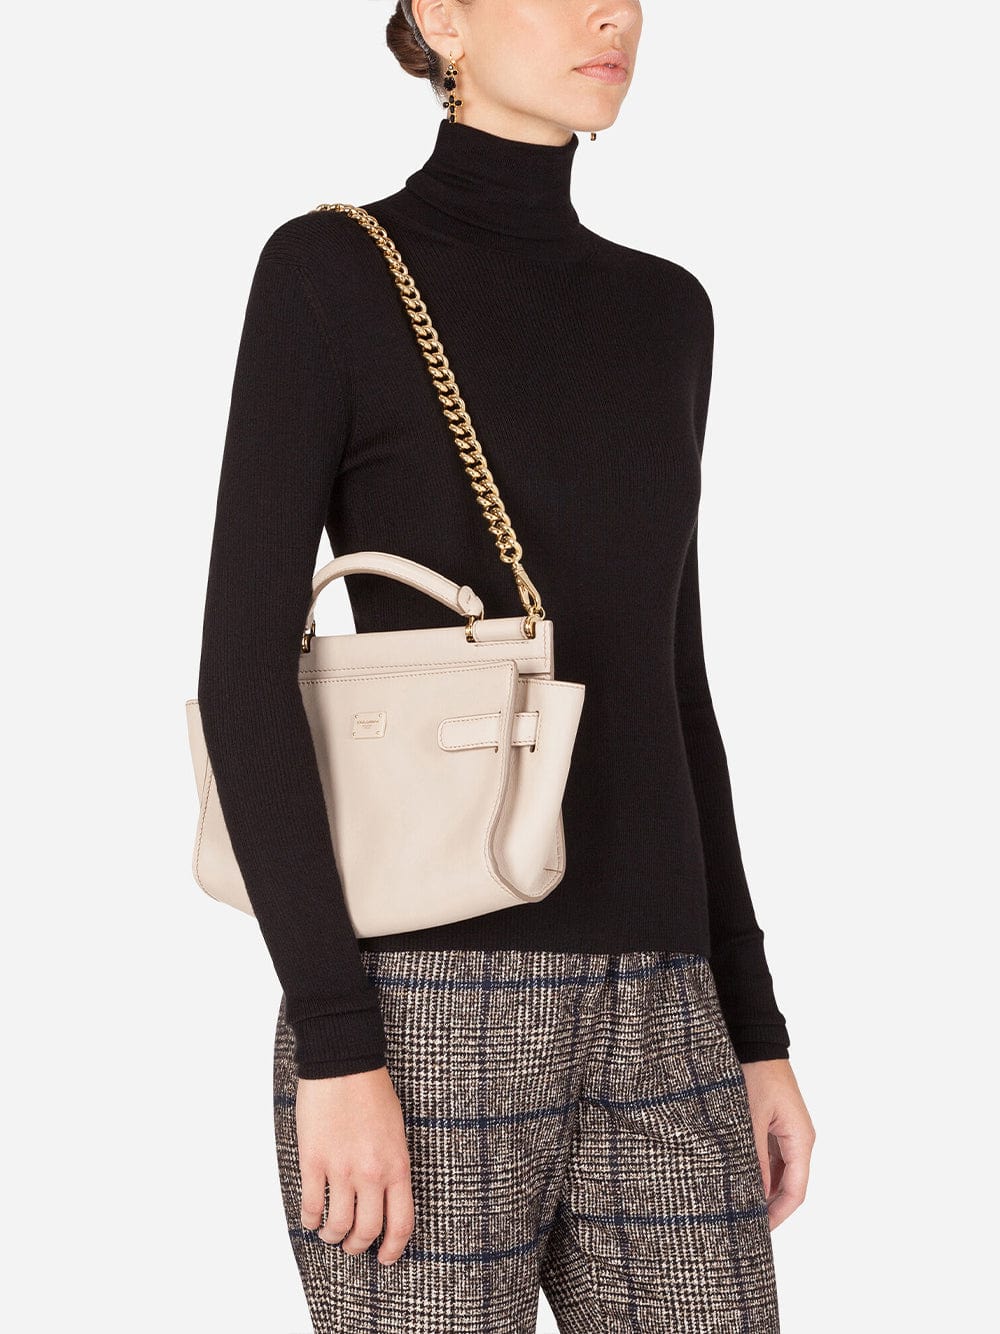 Dolce & Gabbana Multi-Functional Sicily Soft Bag